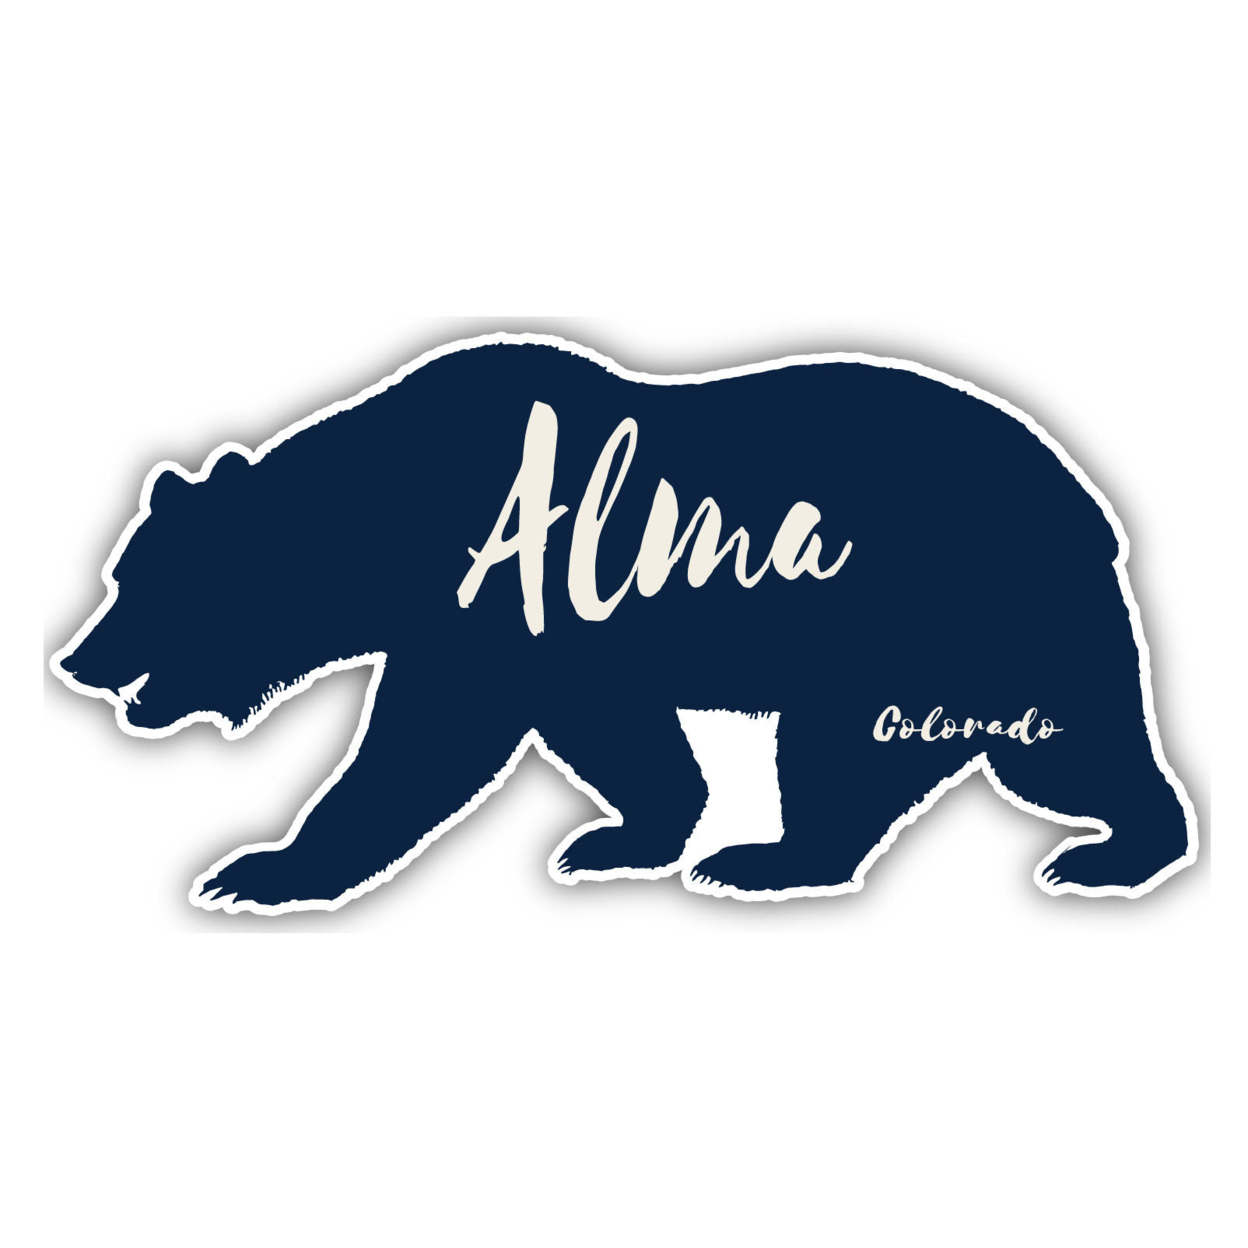 Alma Colorado Souvenir Decorative Stickers (Choose Theme And Size) - Single Unit, 6-Inch, Adventures Awaits